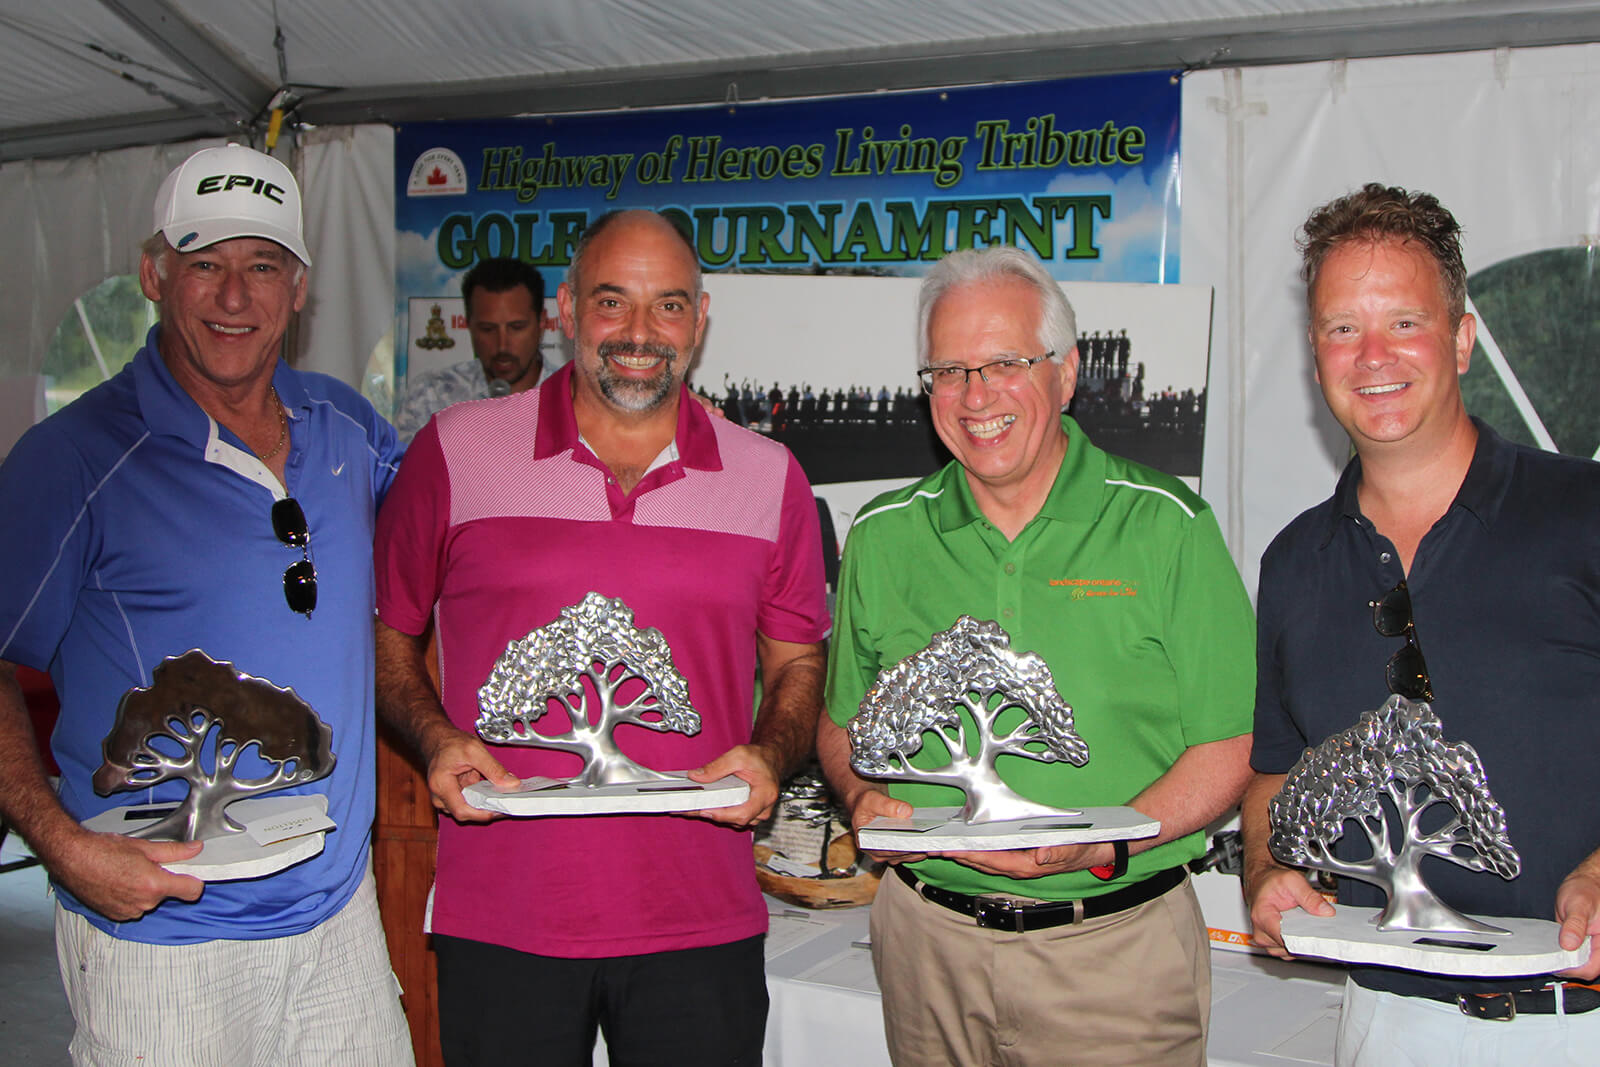 The winning foursome: Paul Rosenberg, Joe Morello, Tony DiGiovanni and Craig Stovel.